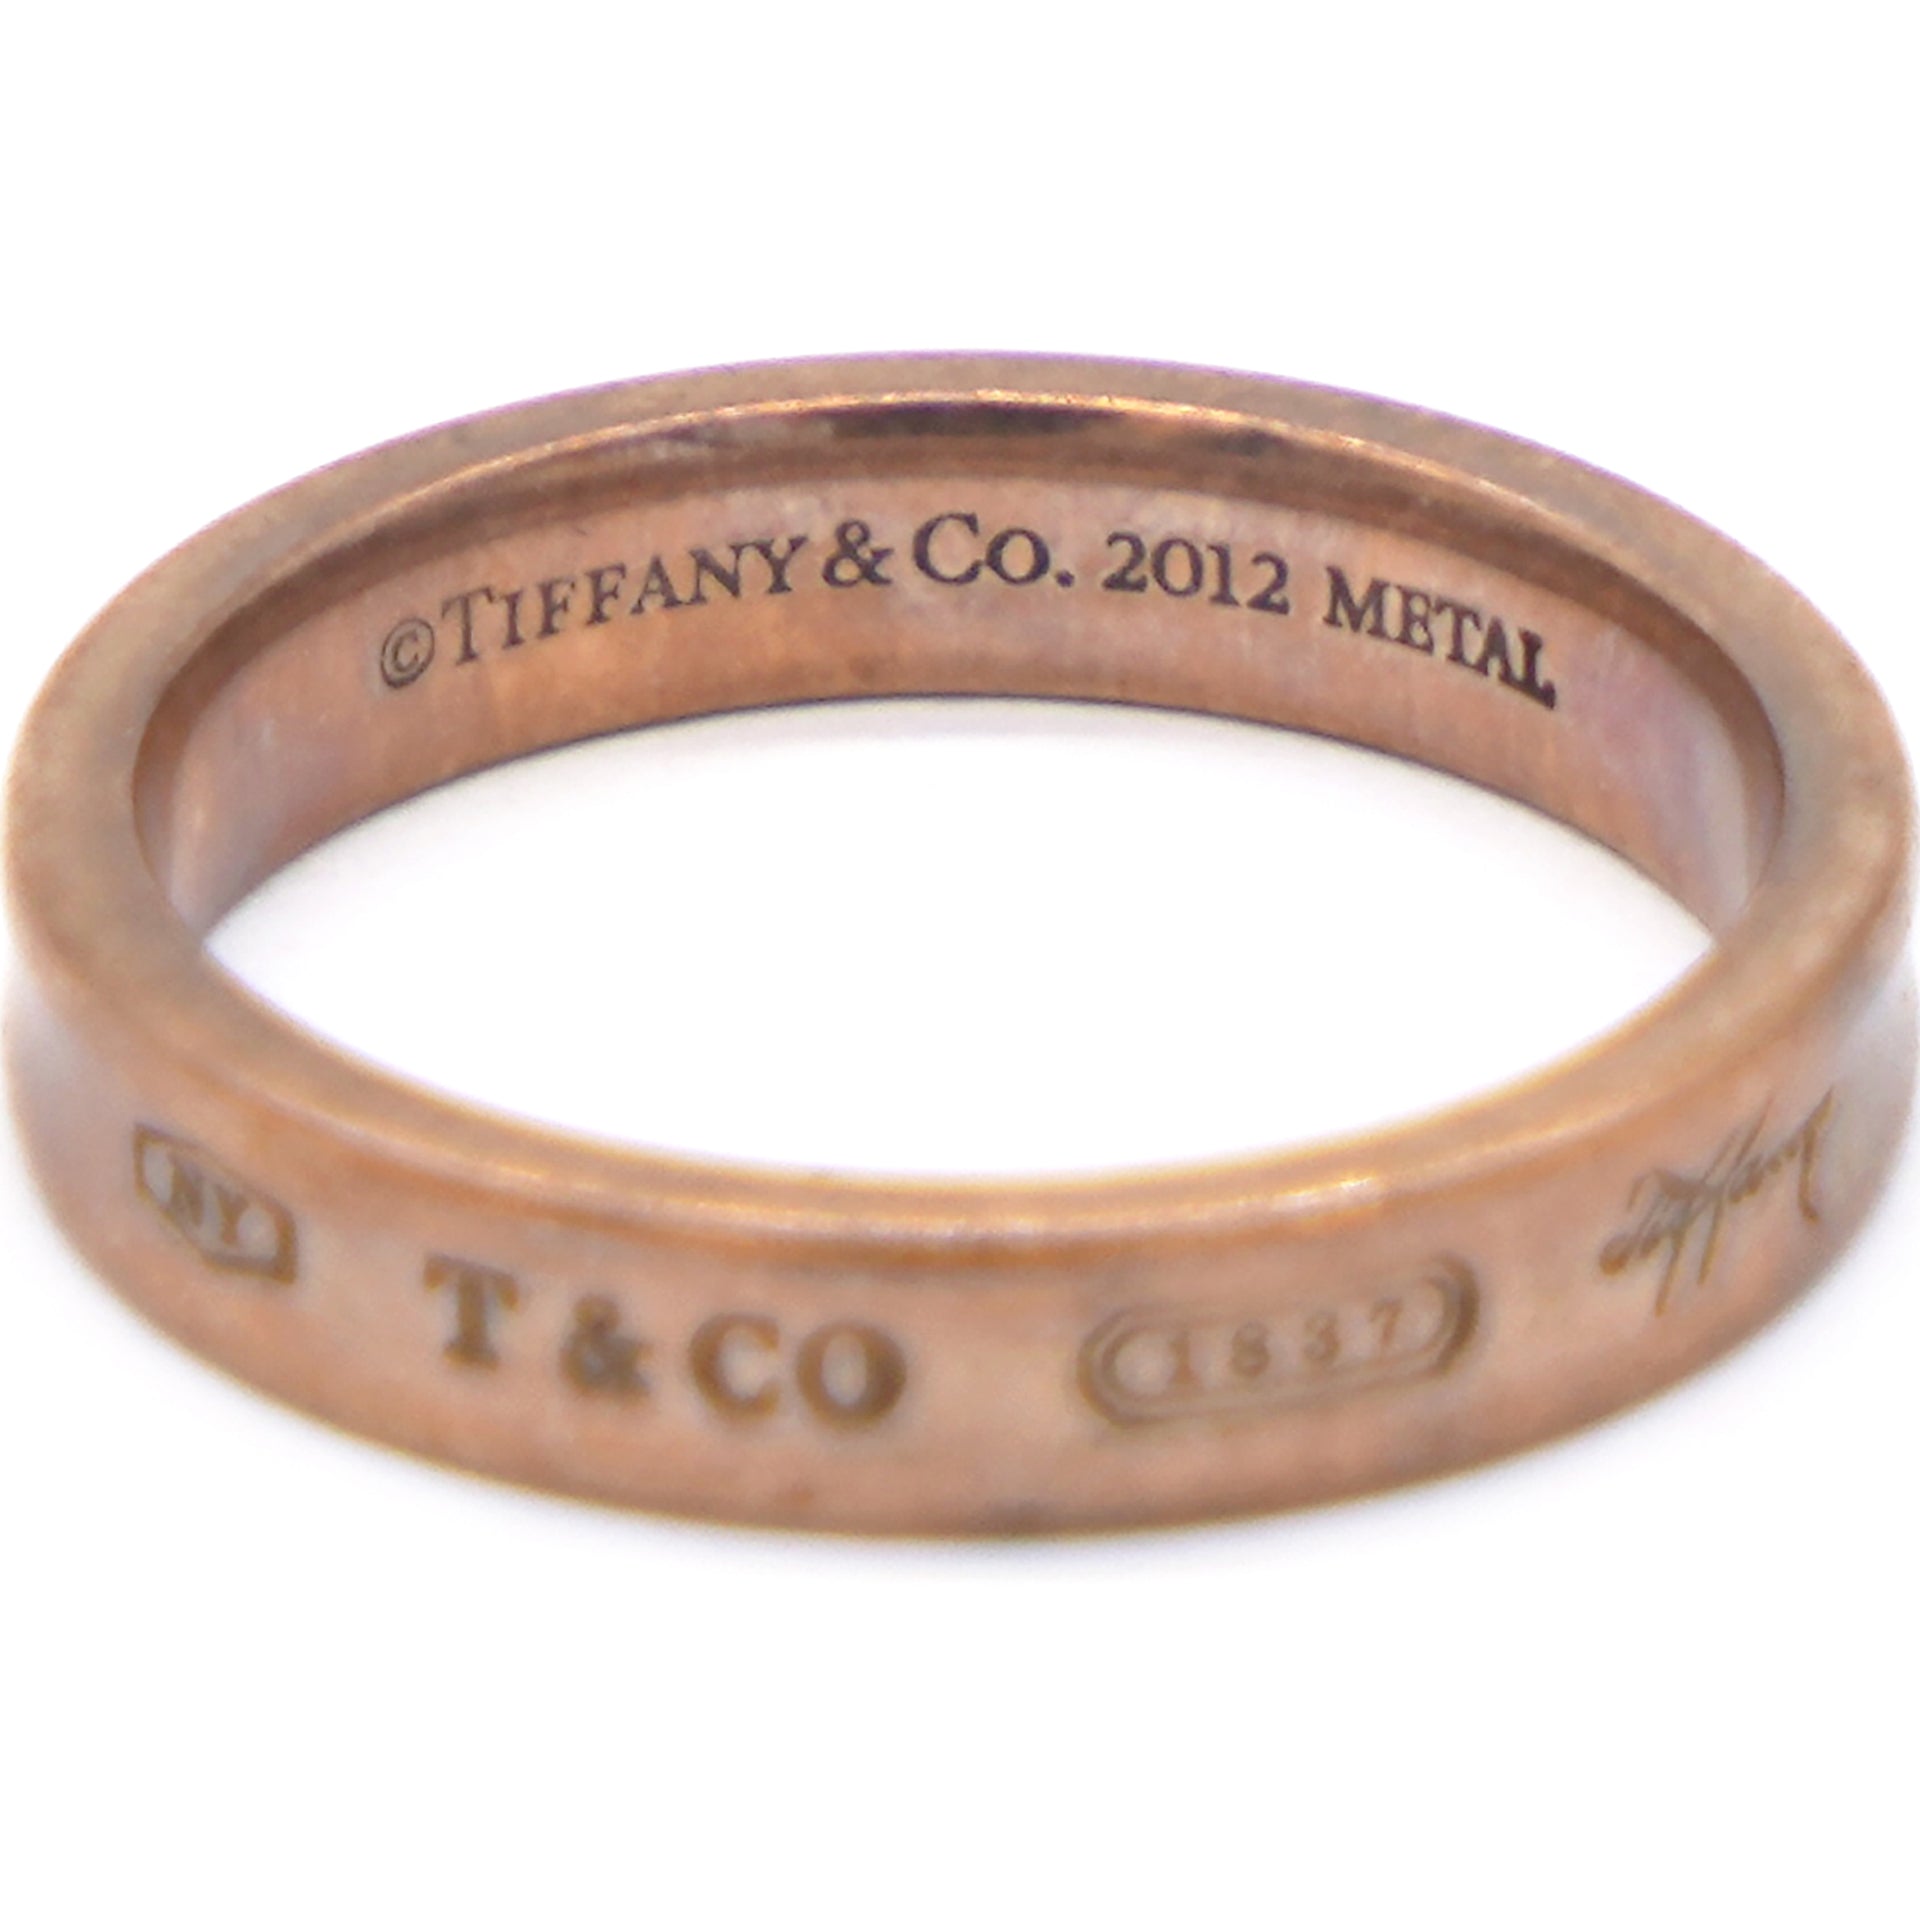 TIFFANY & CO. Forever Wedding Band Ring Size 44